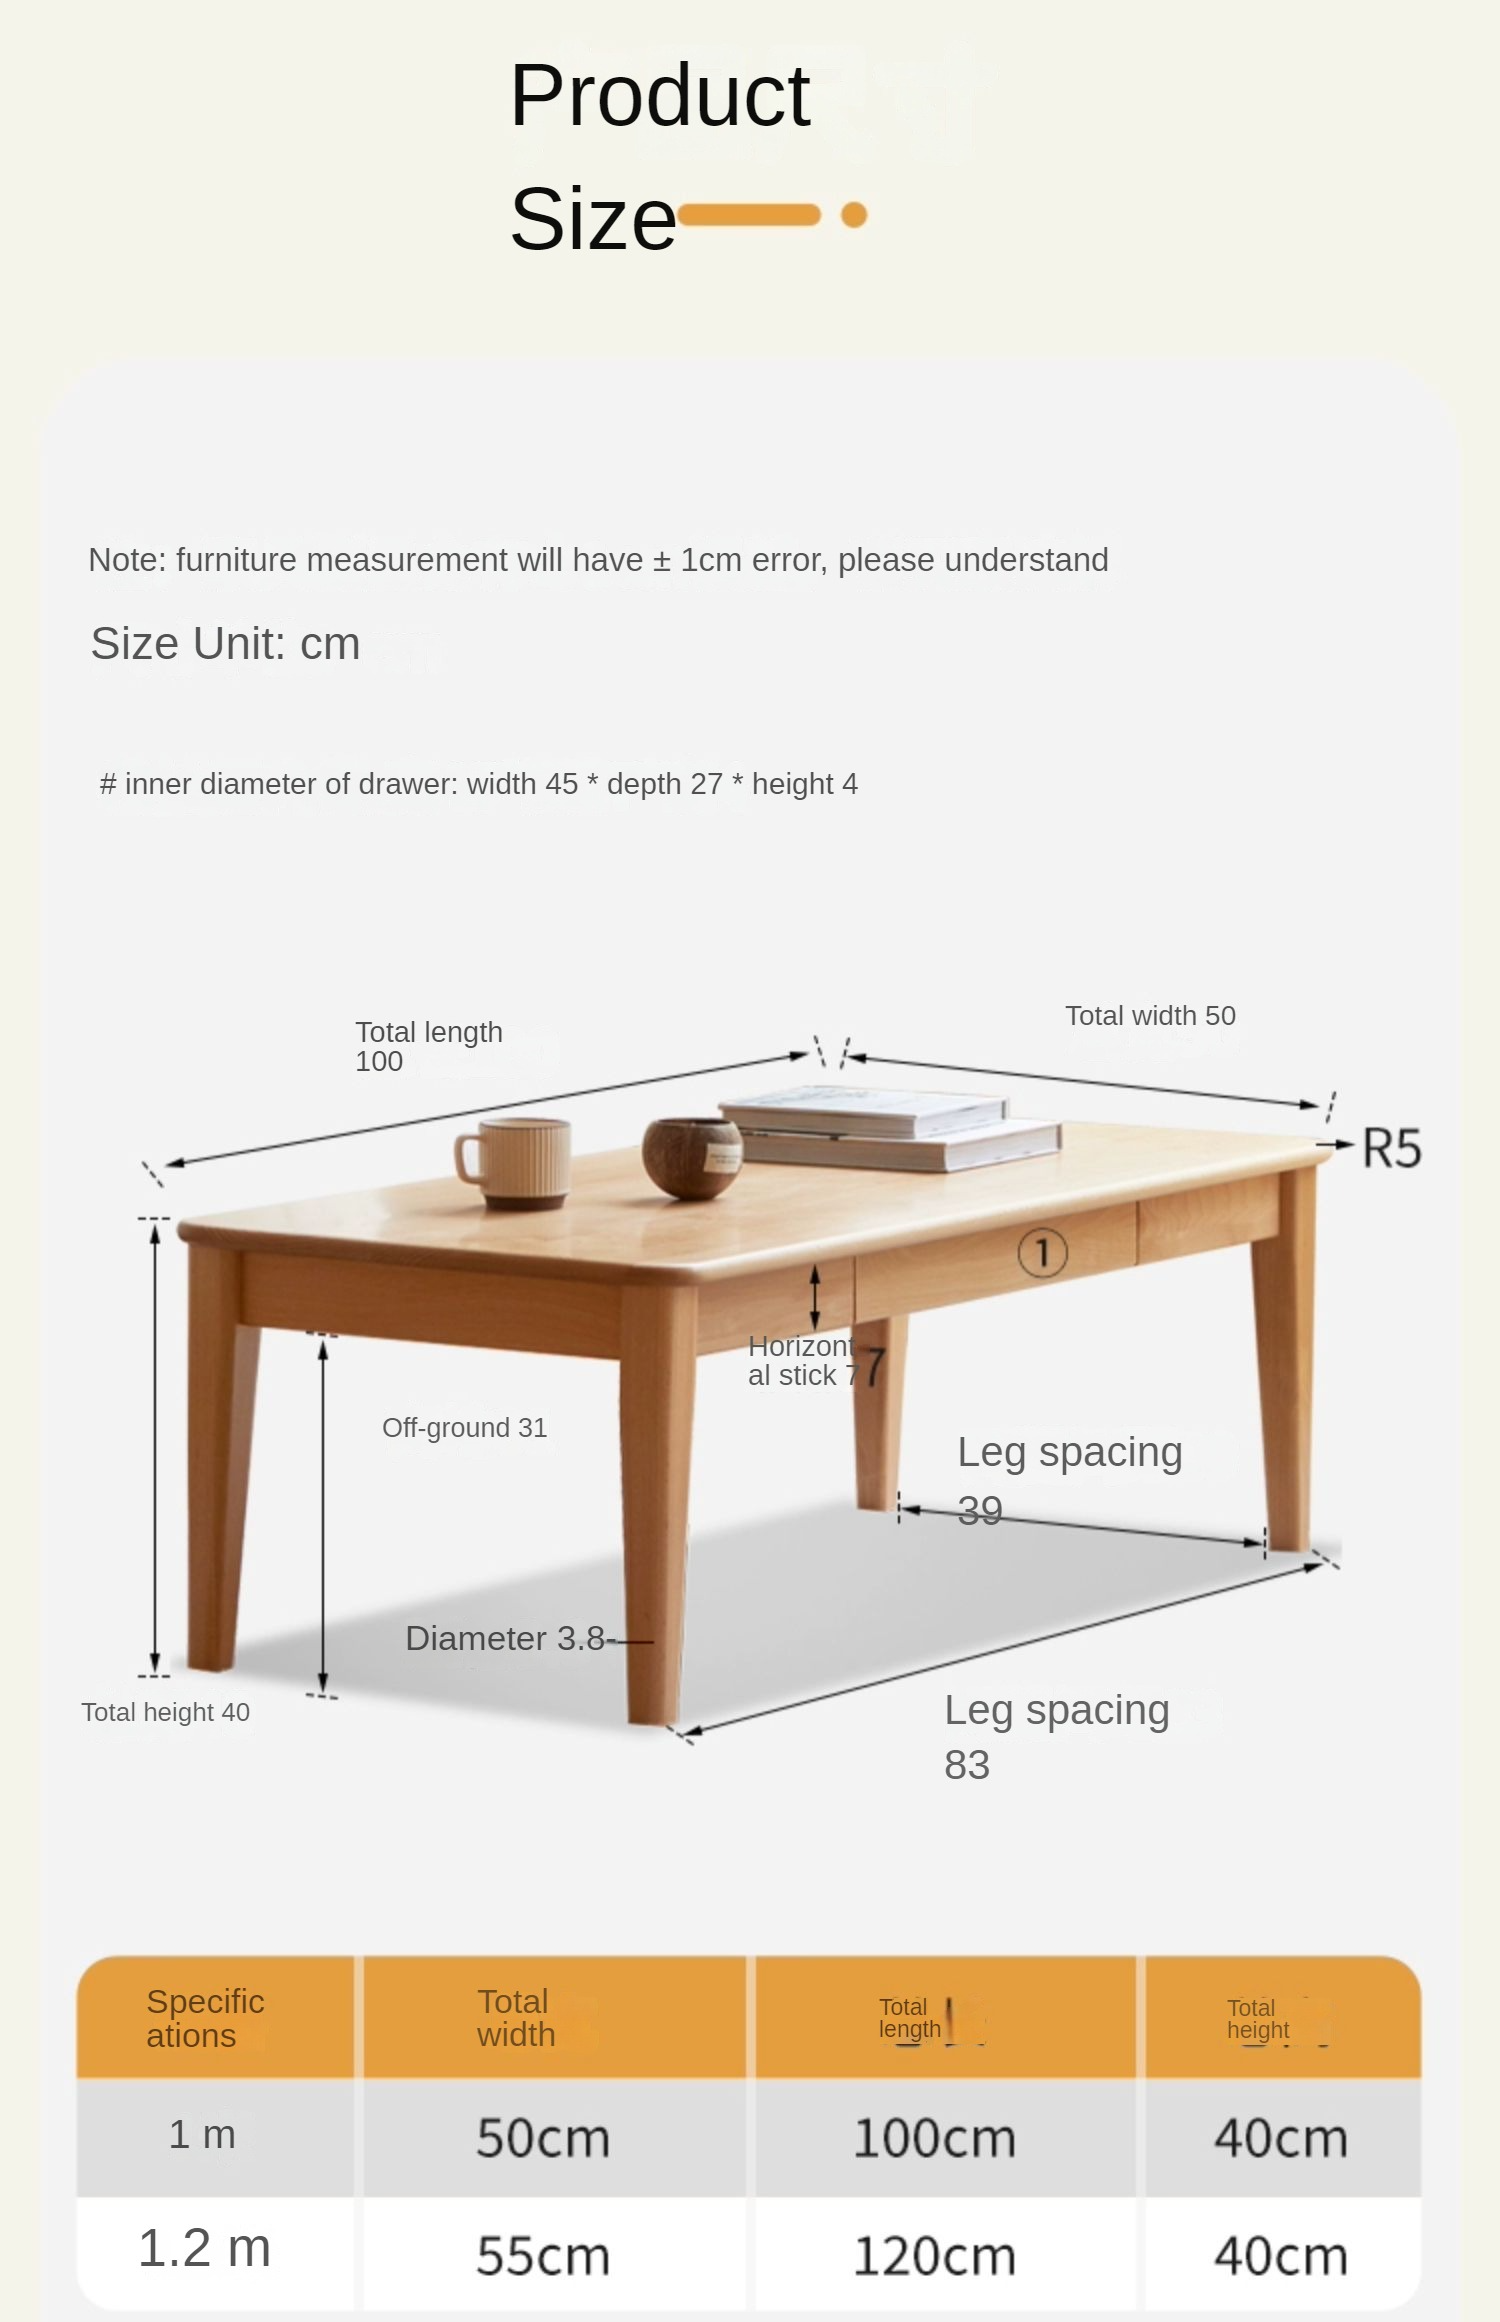 Beech solid wood coffee table modern "